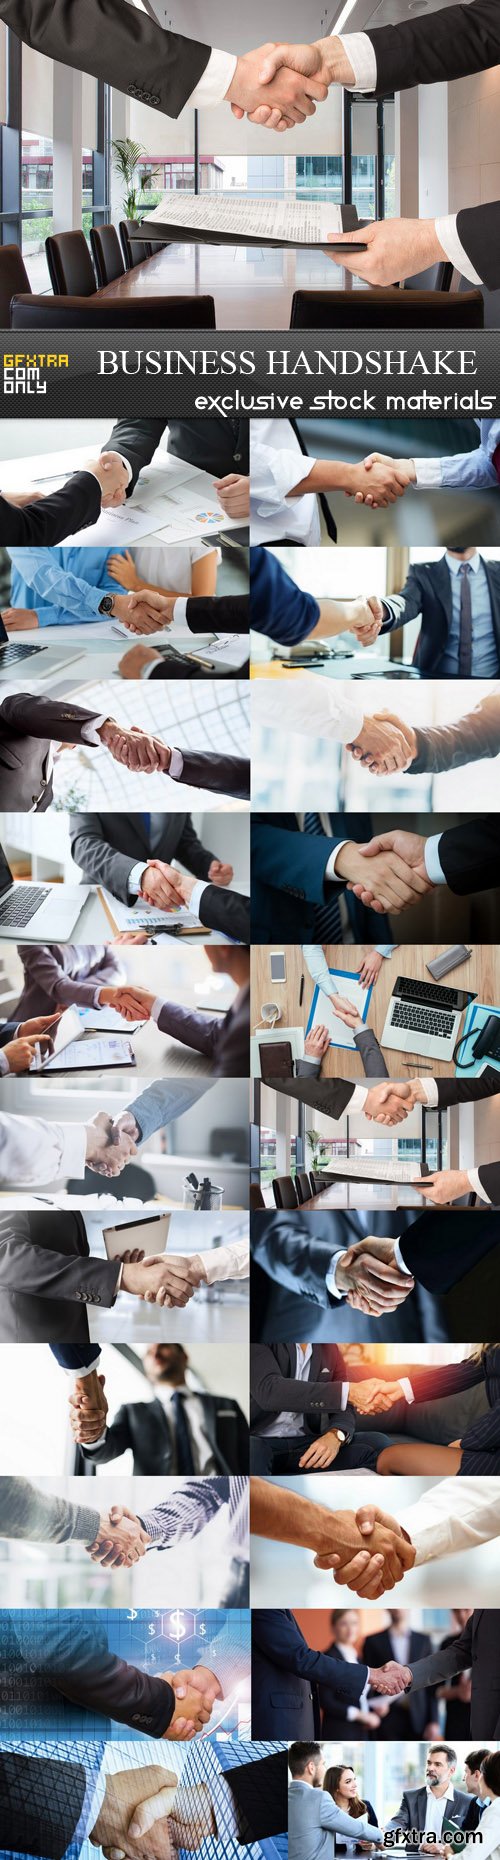 Business Handshake - 22 UHQ JPEG